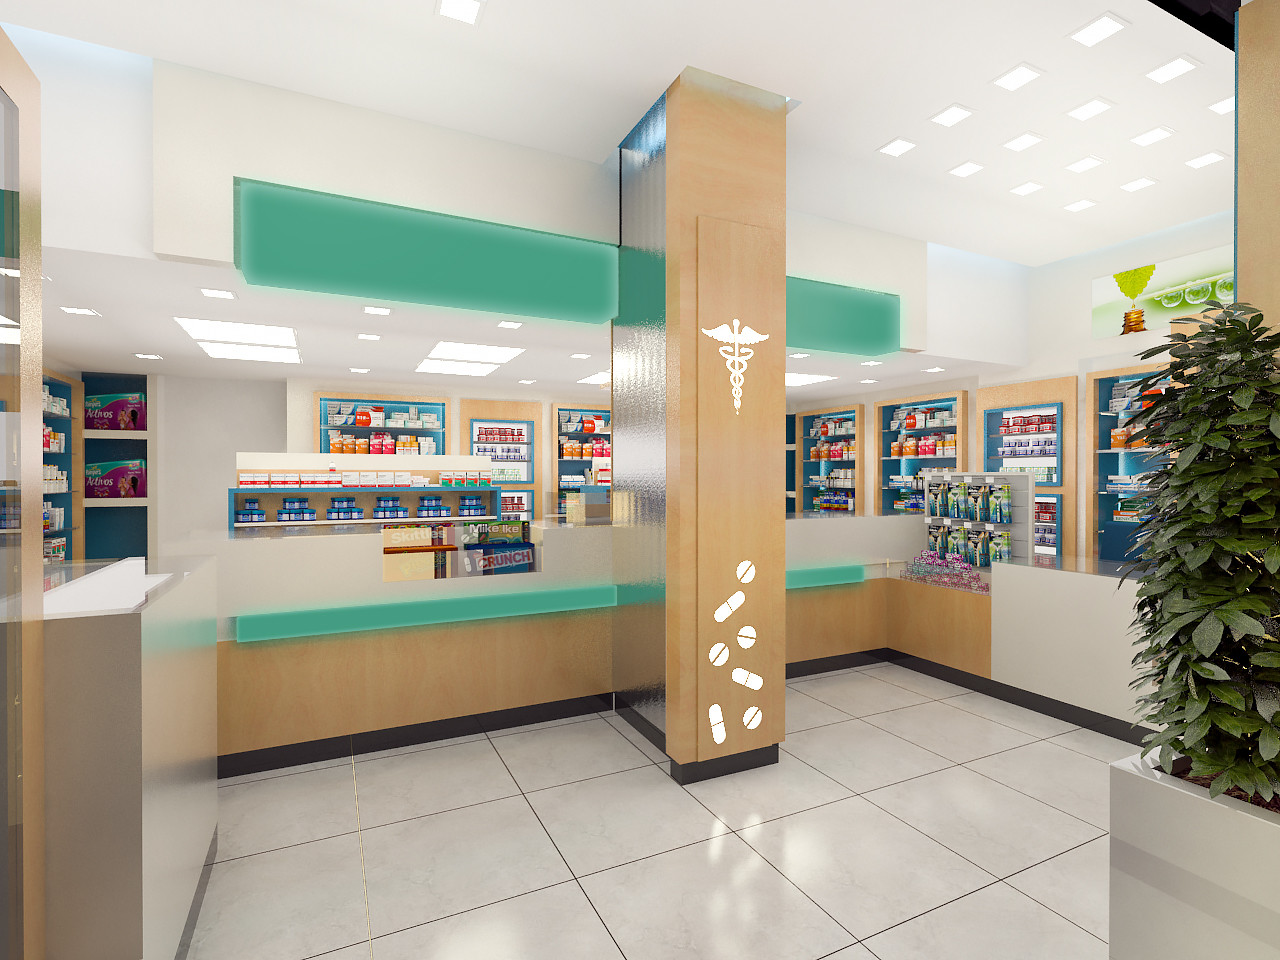 Yasin Alastal - Pharmacy interior Design